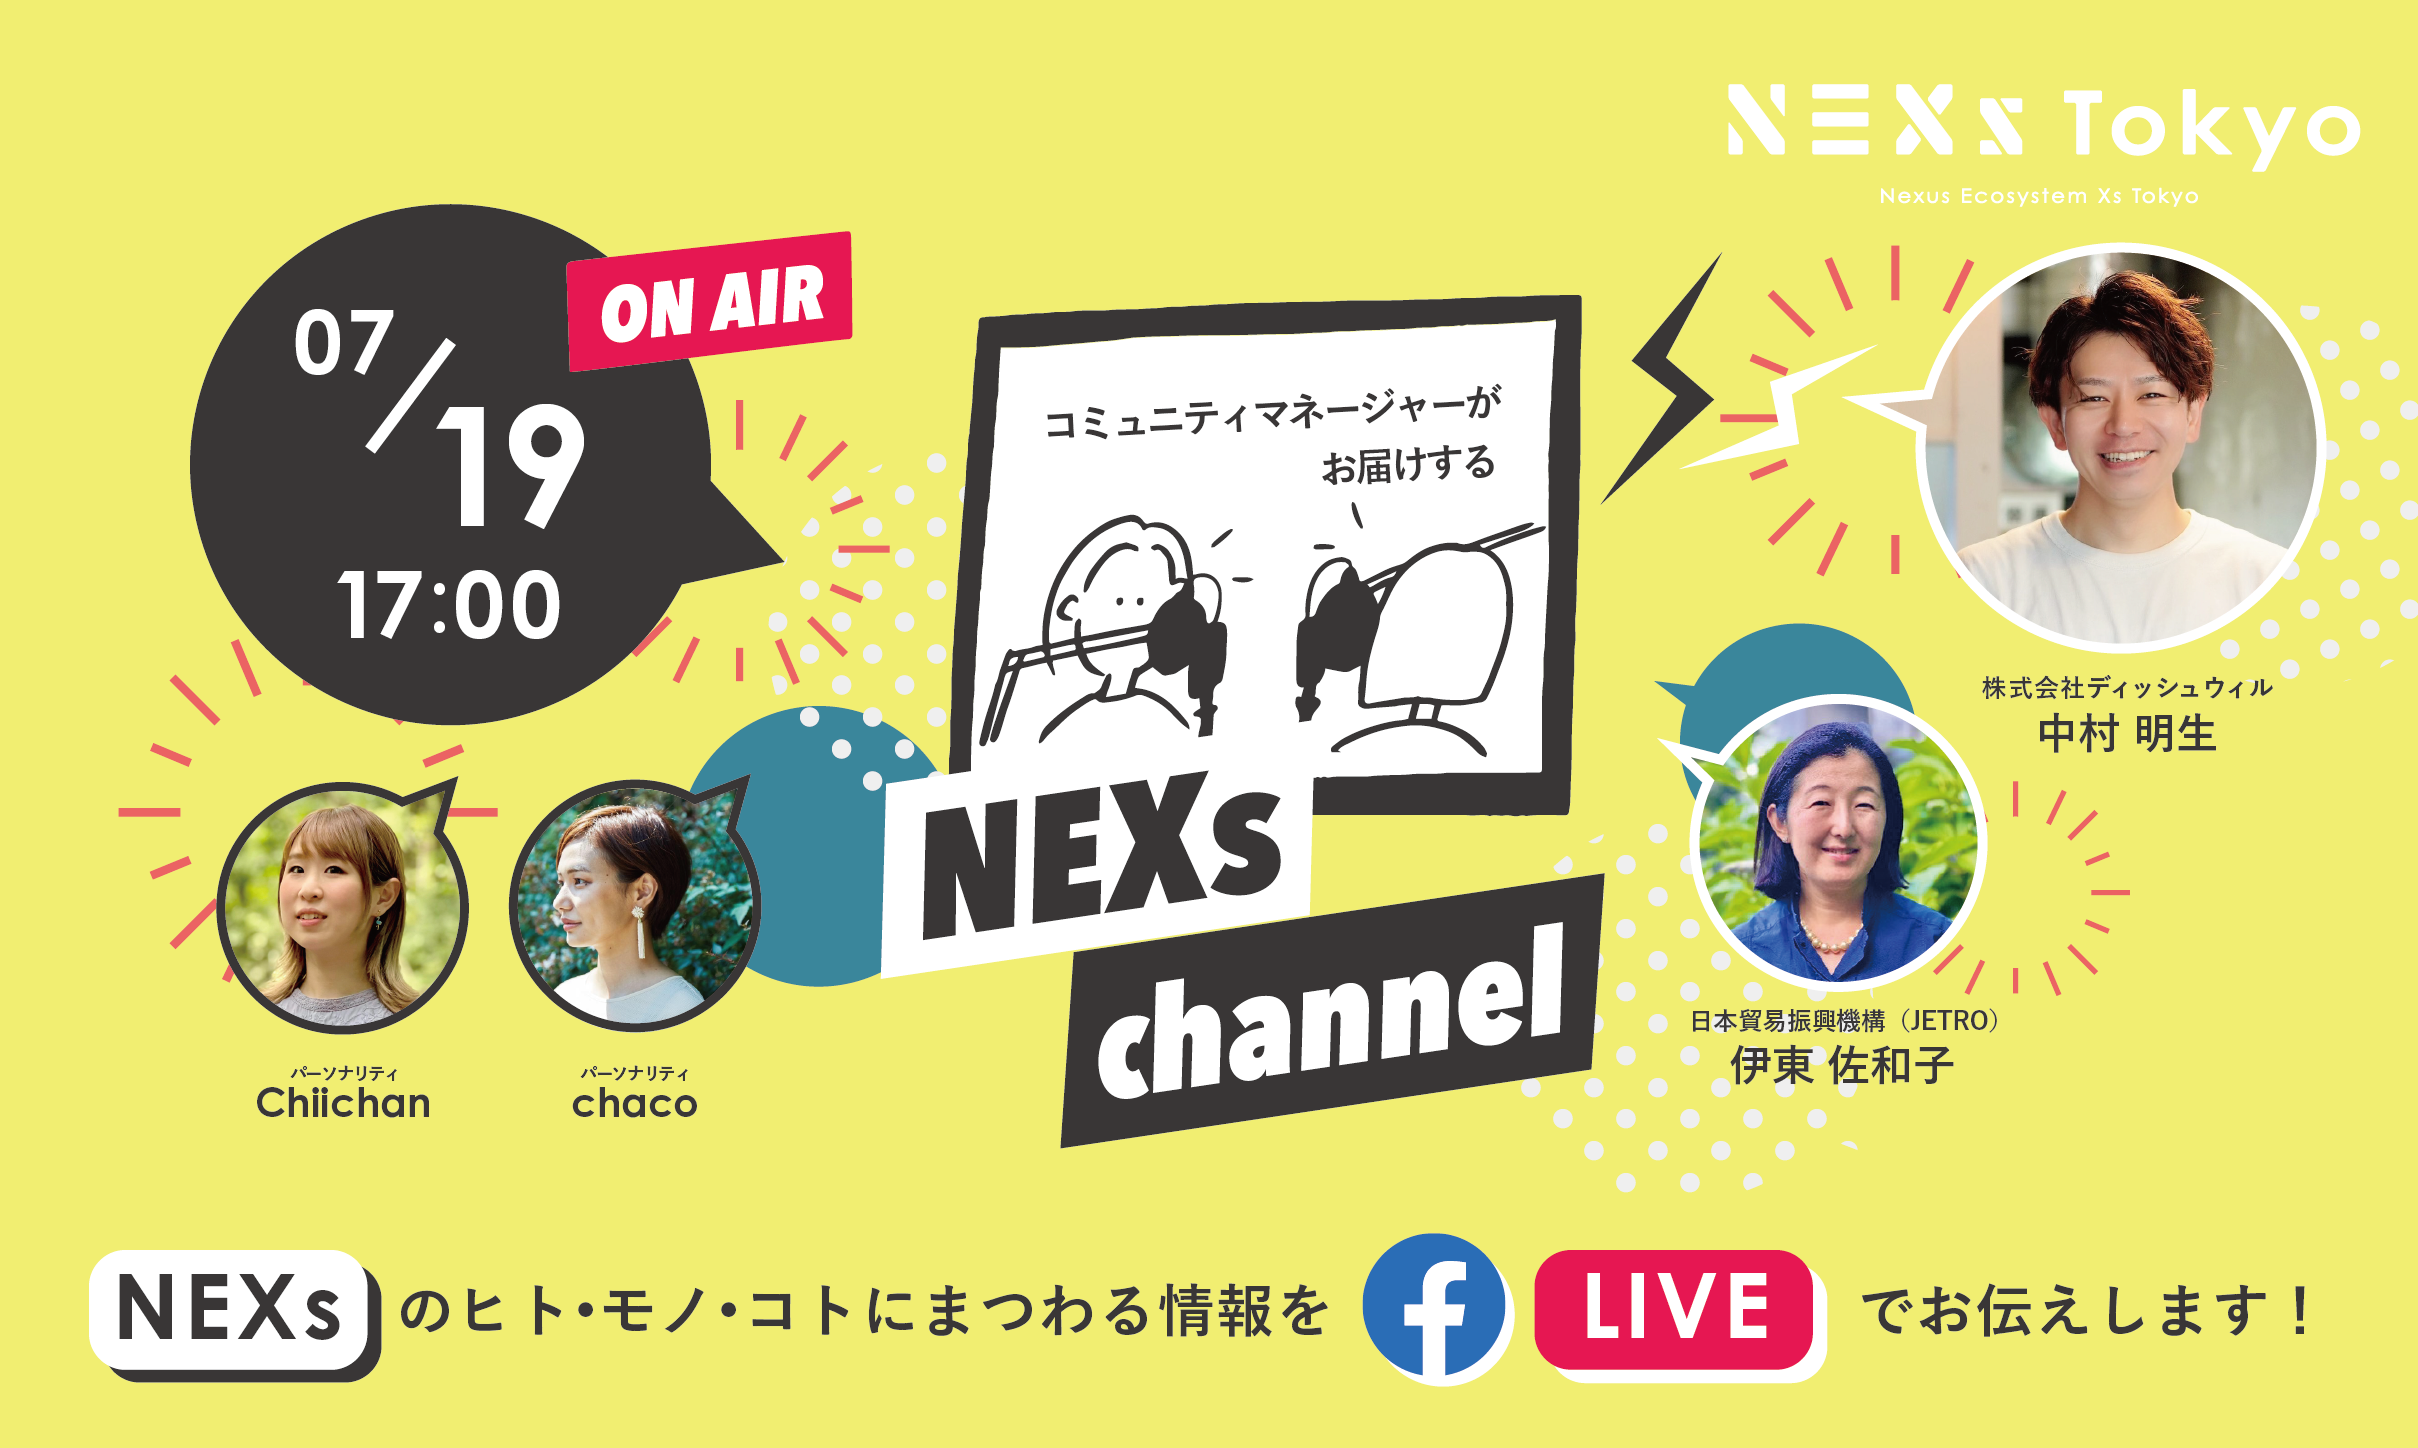 NEXs channel #30 -NEXs Tokyoのヒト・モノ・コトを特設ラジオブースから生放送でお届け！-